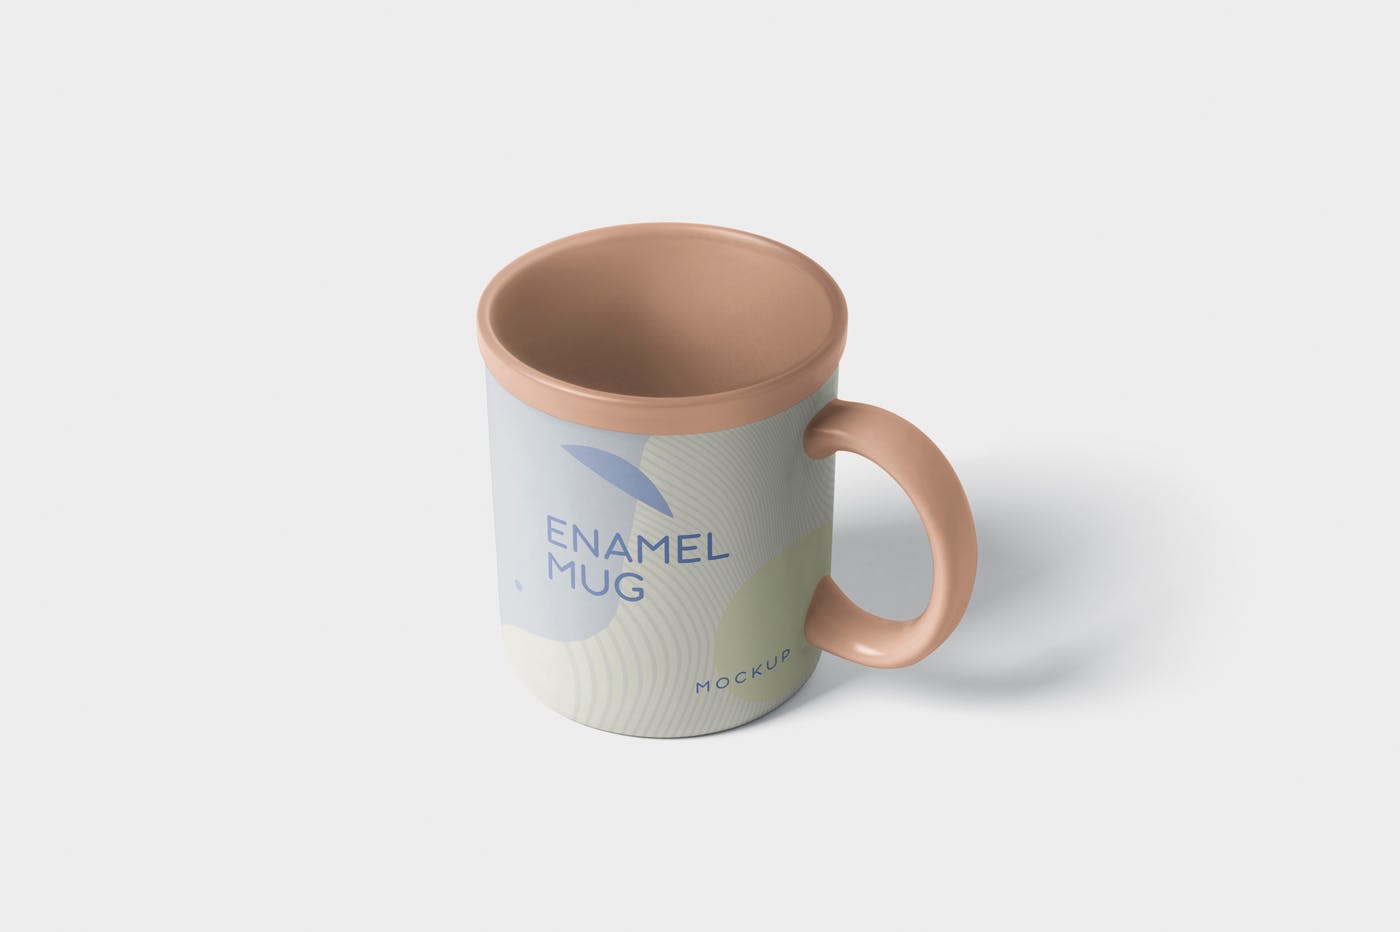 带把手圆形搪瓷杯马克杯图案设计16图库精选 Round Enamel Mug Mockup With Handle插图(2)